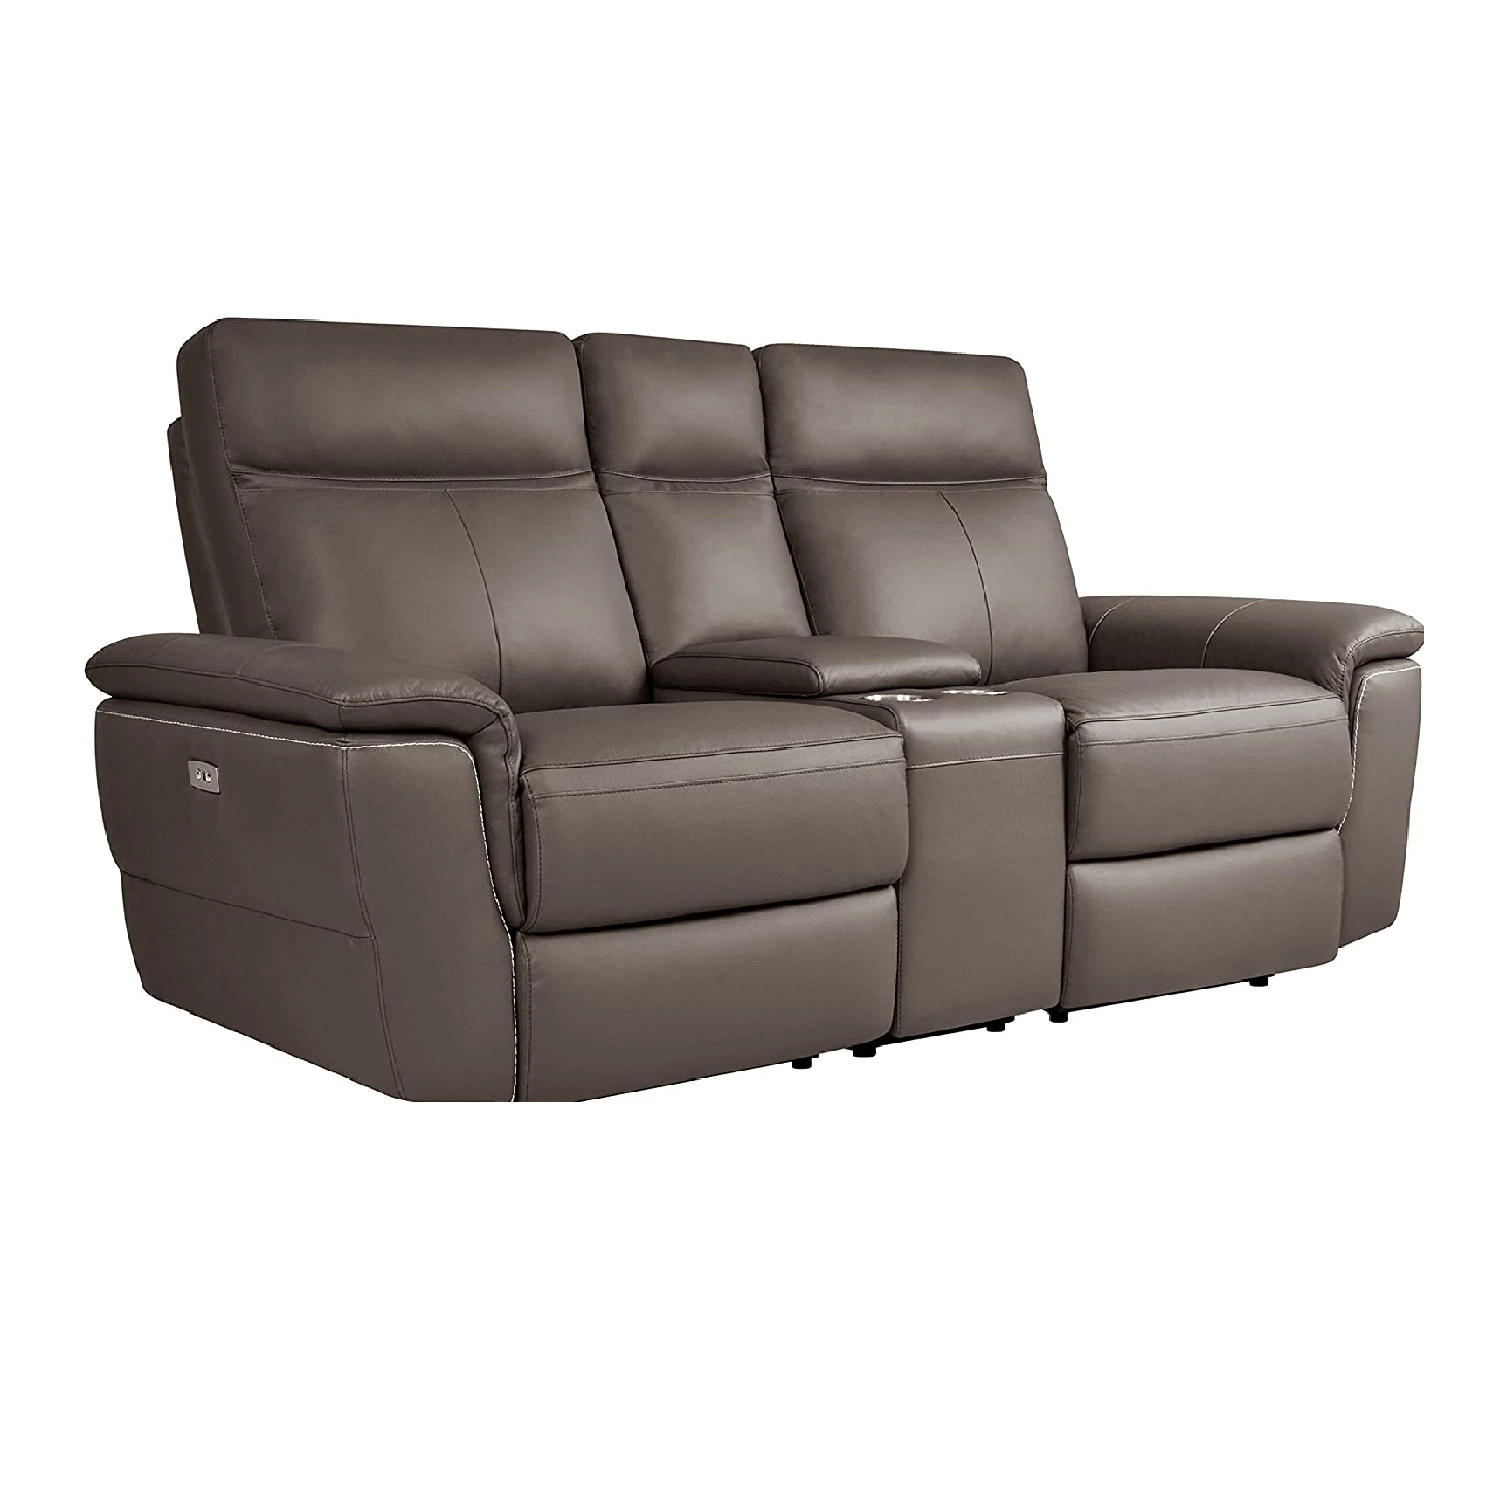 Geeksofa Modern 3+2+1 Seater Teach Fabric Recliner Sofa Set Reclinable for Living Room Furniture